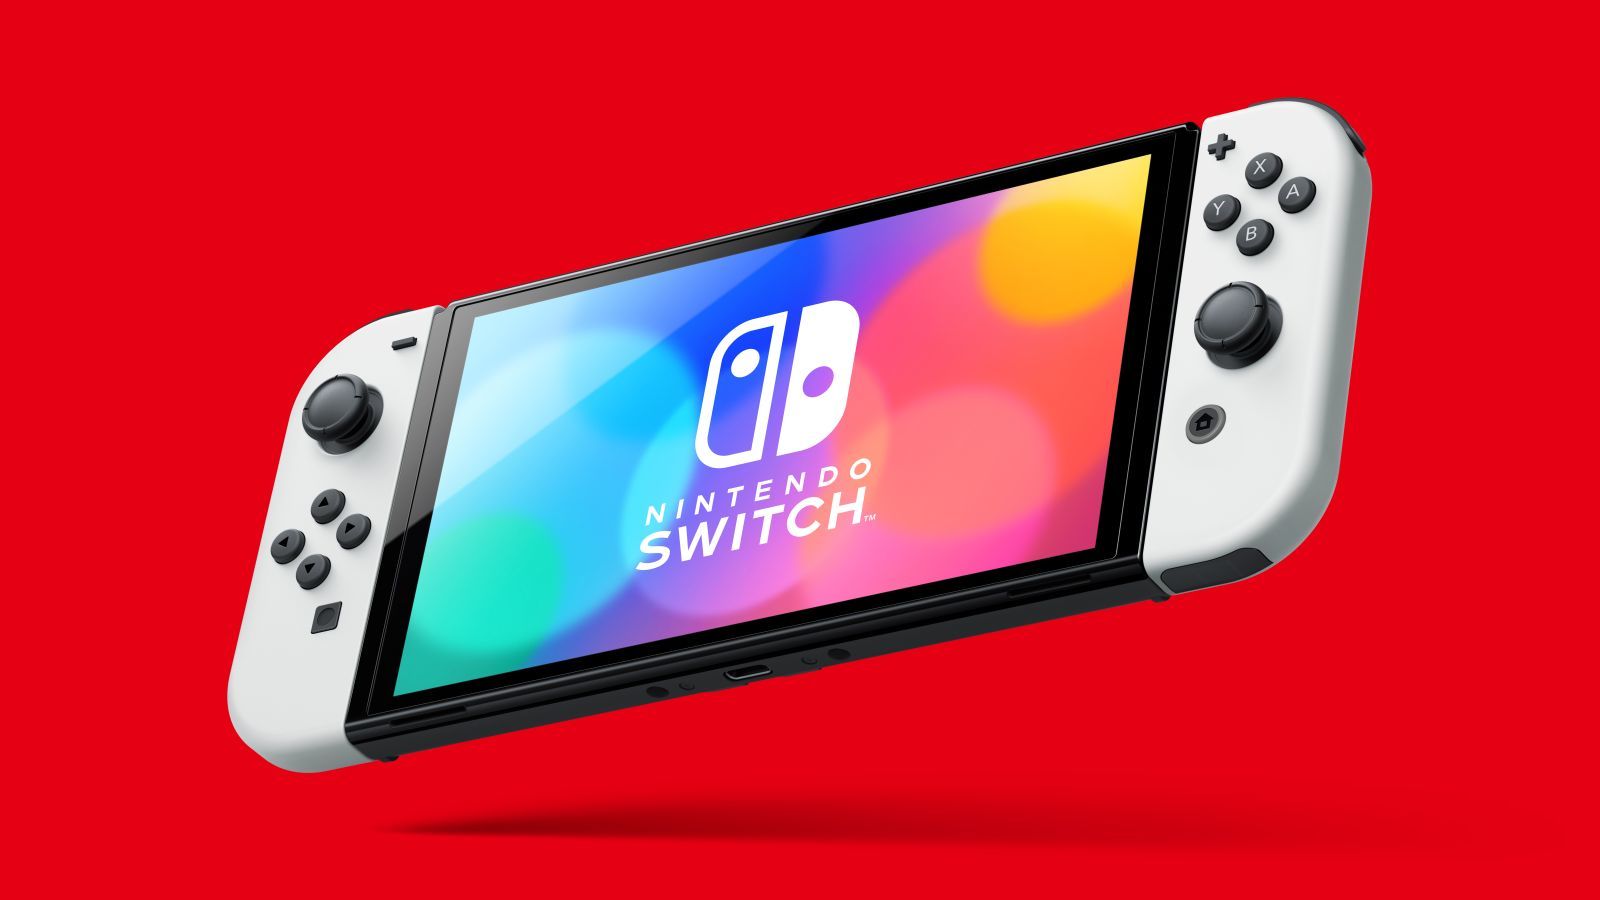 Nintendo Switch Price & Specs in Malaysia